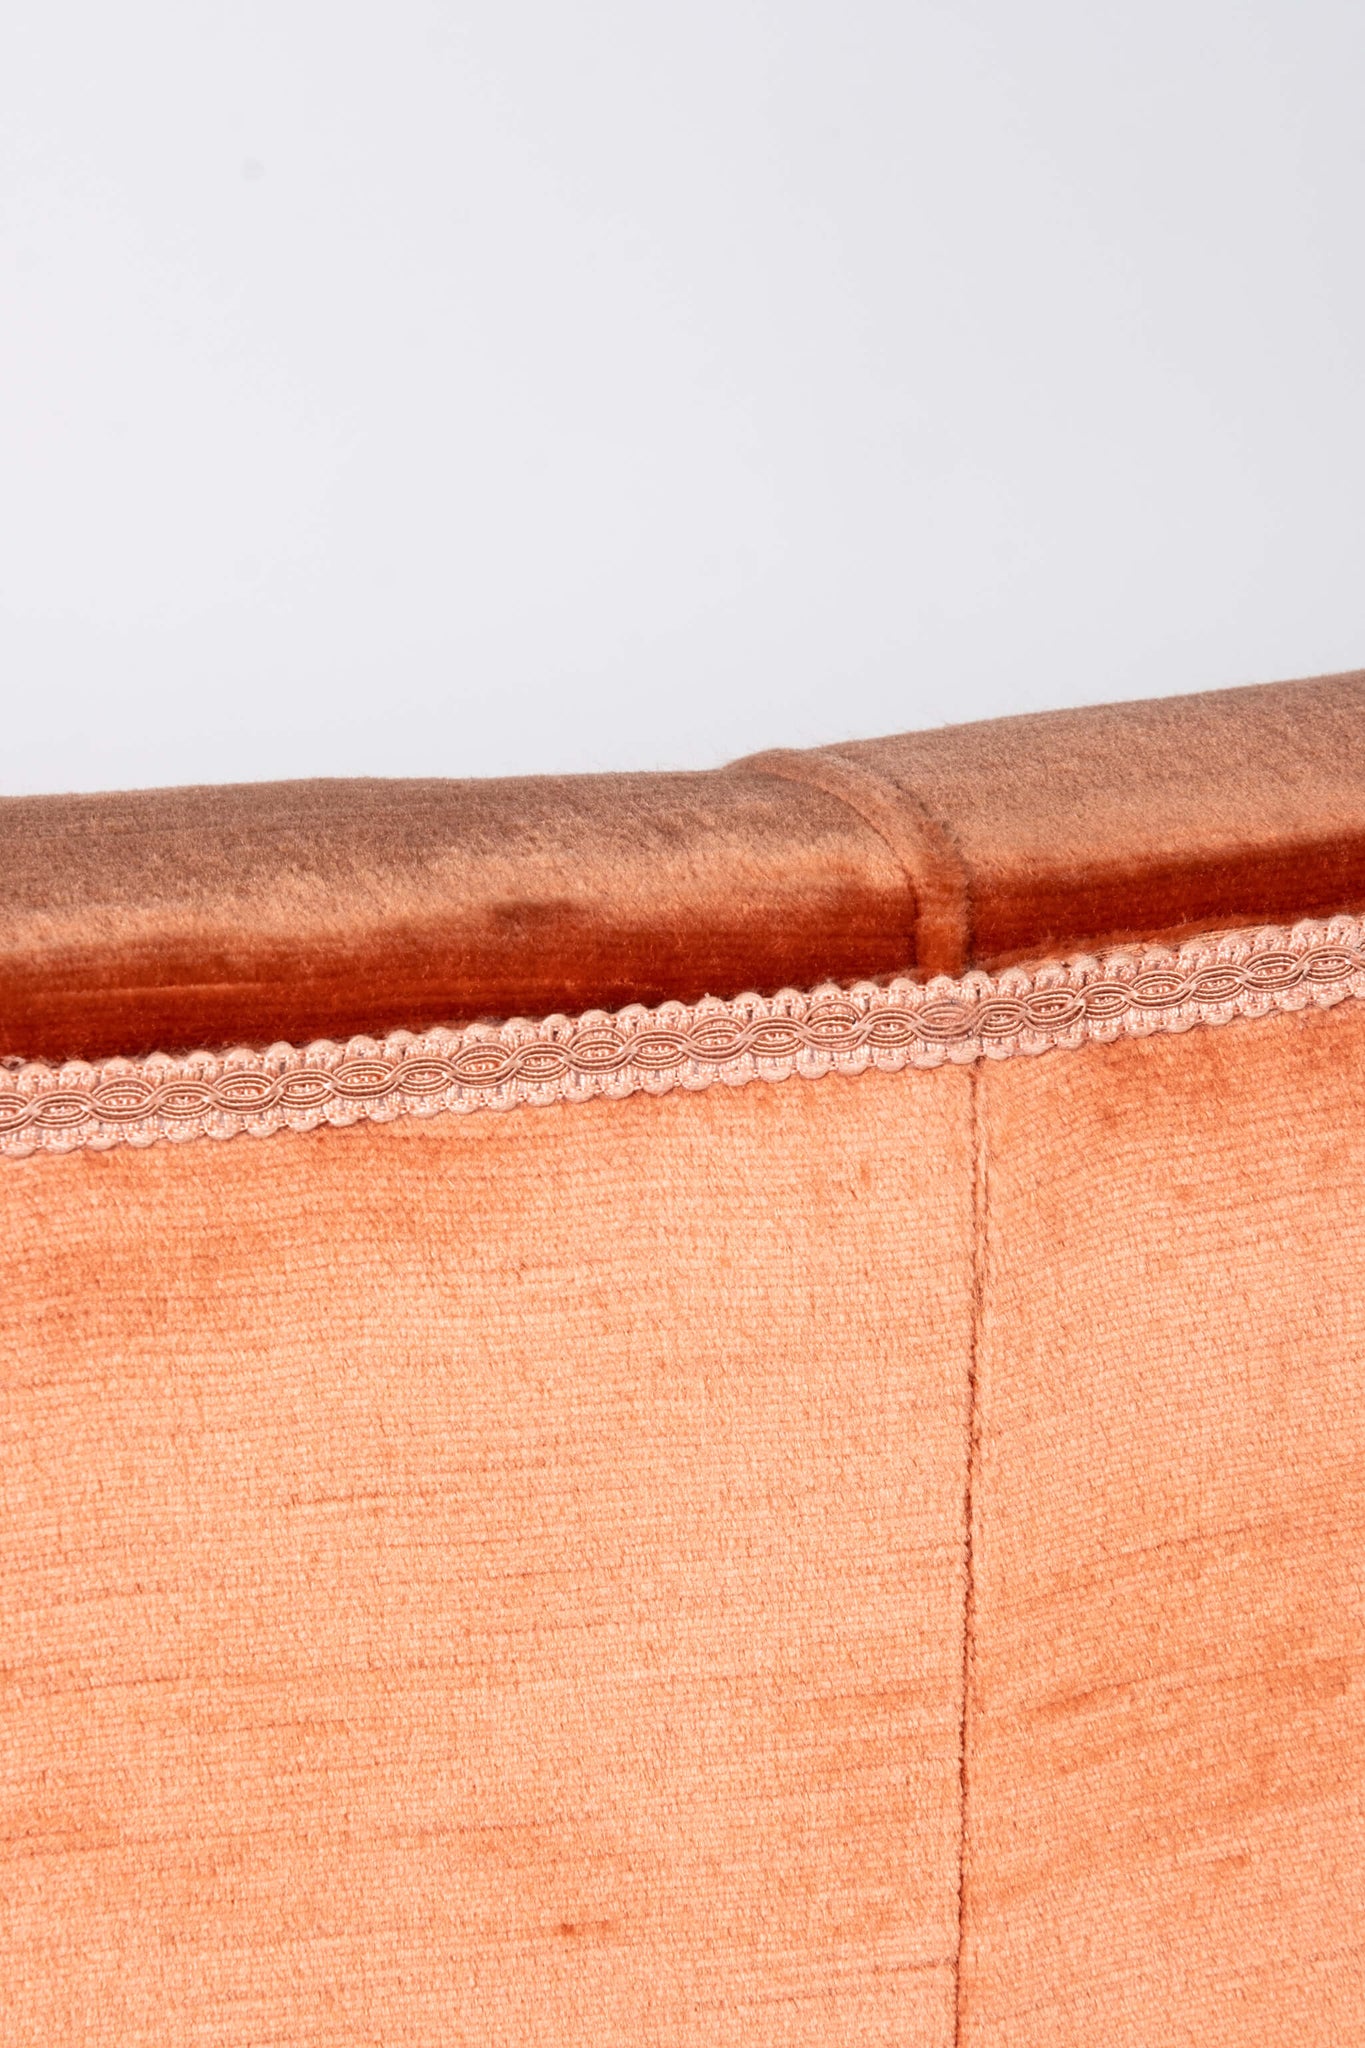 Extremely Rare Vintage Pink Orange Sofa with Curved Frame Detail Casa Giardino Gio Ponti, upholstery detail